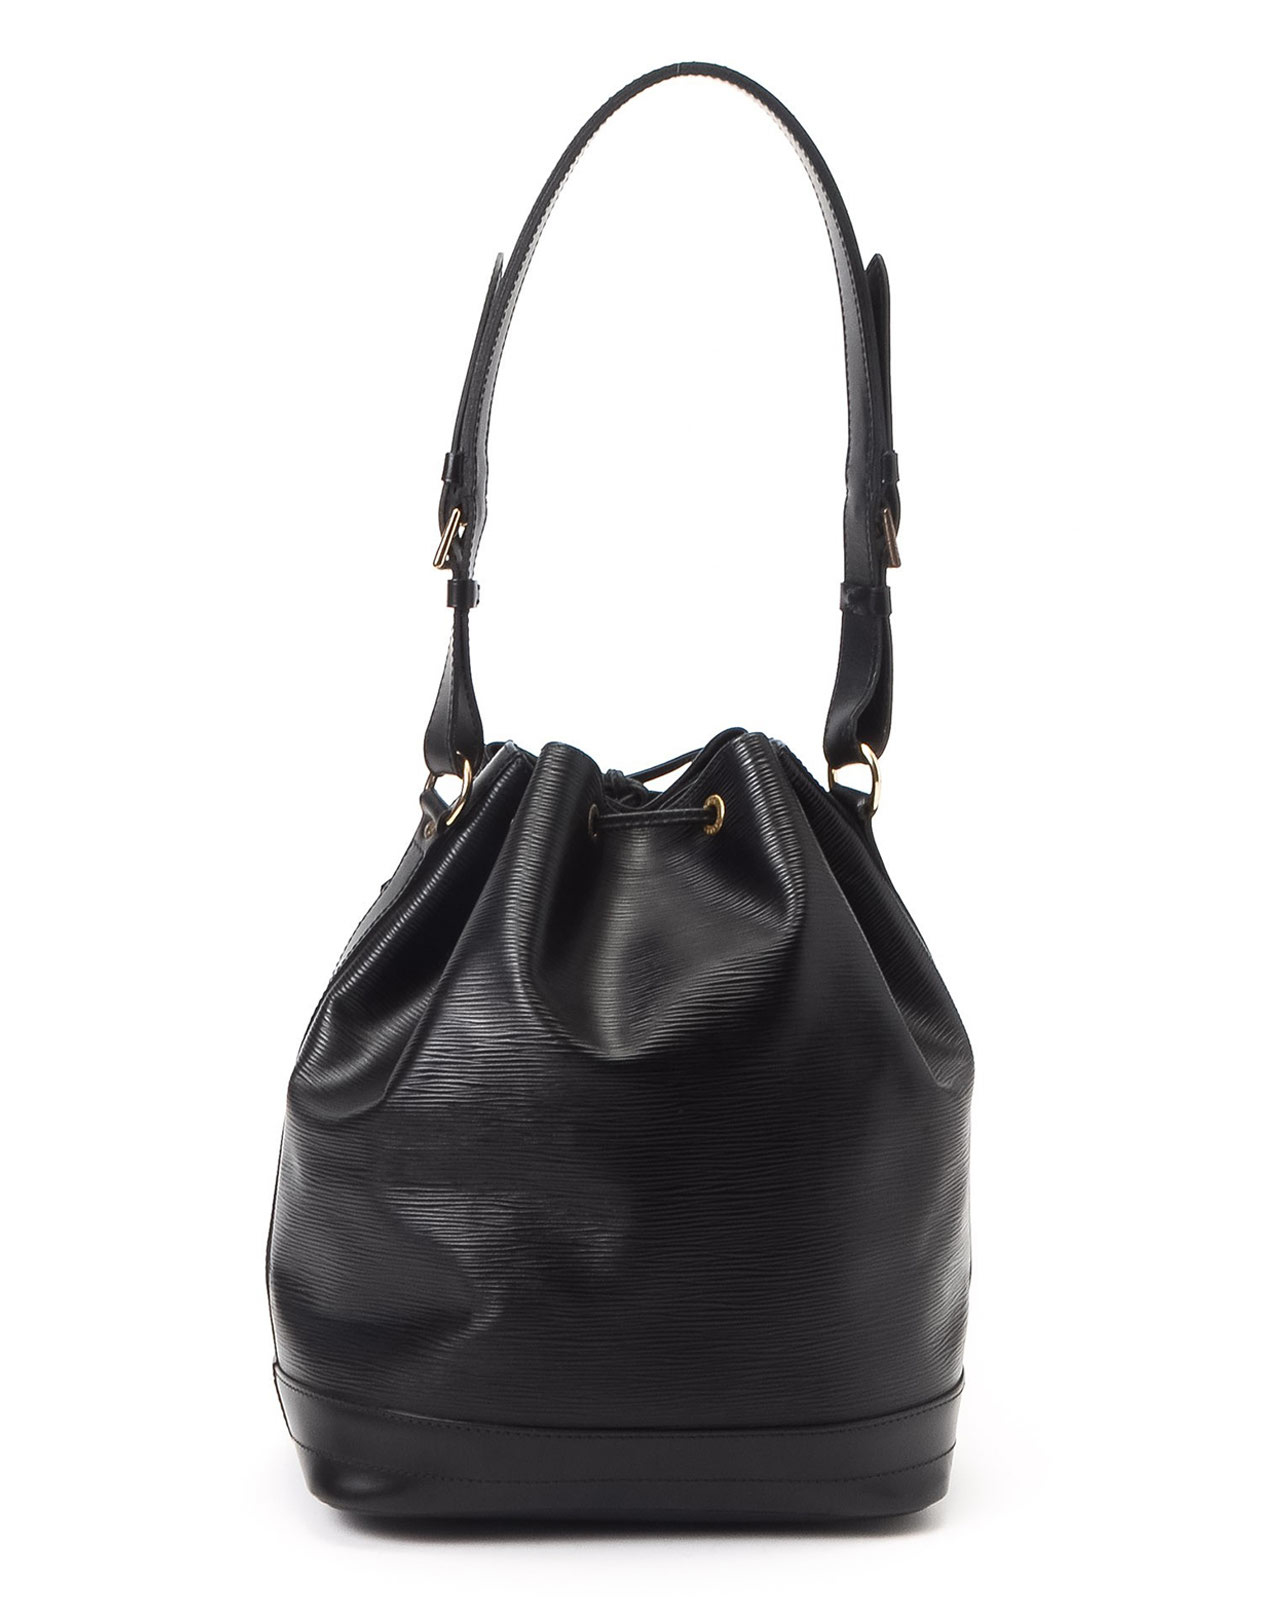 Lyst - Louis Vuitton Noe Shoulder Bag in Black